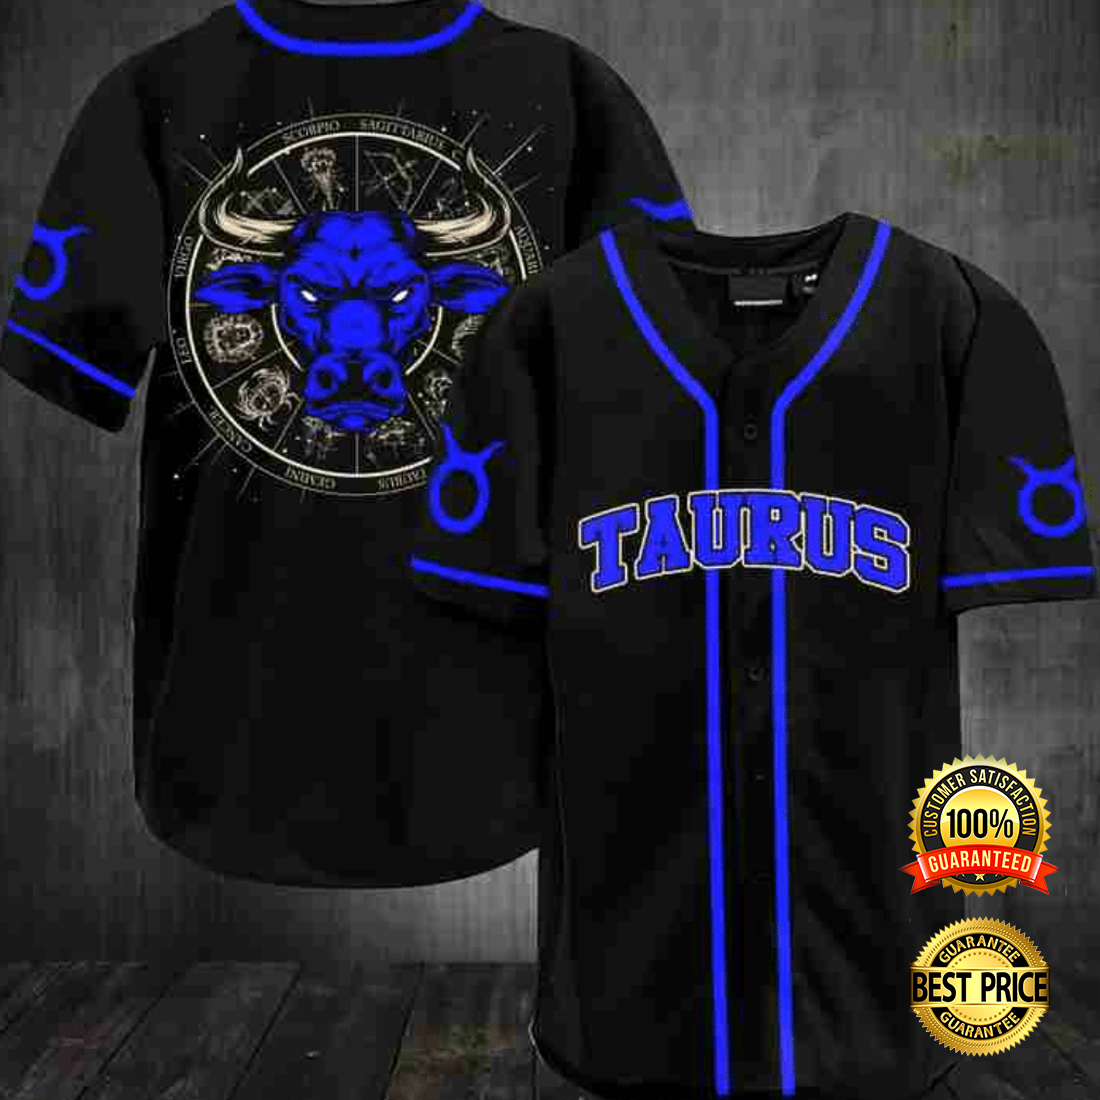 Taurus baseball jersey